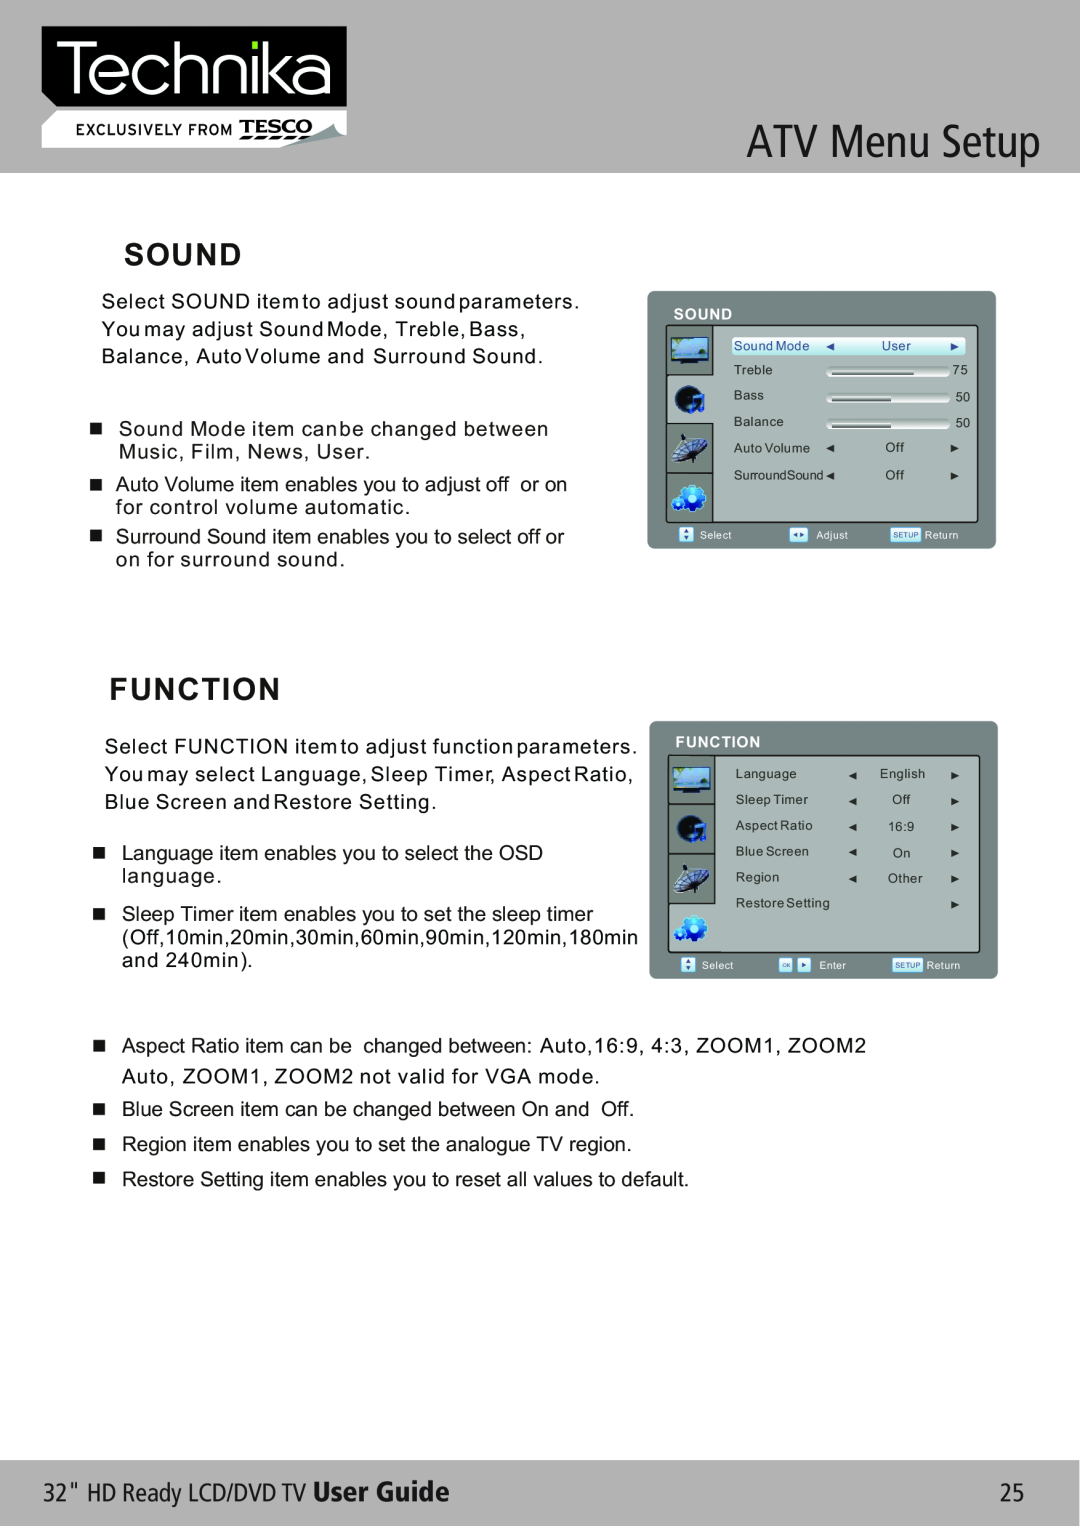 Technika 32-612 manual ATV Menu Setup, Sound, Function, HD Ready LCD/DVD TV User Guide 